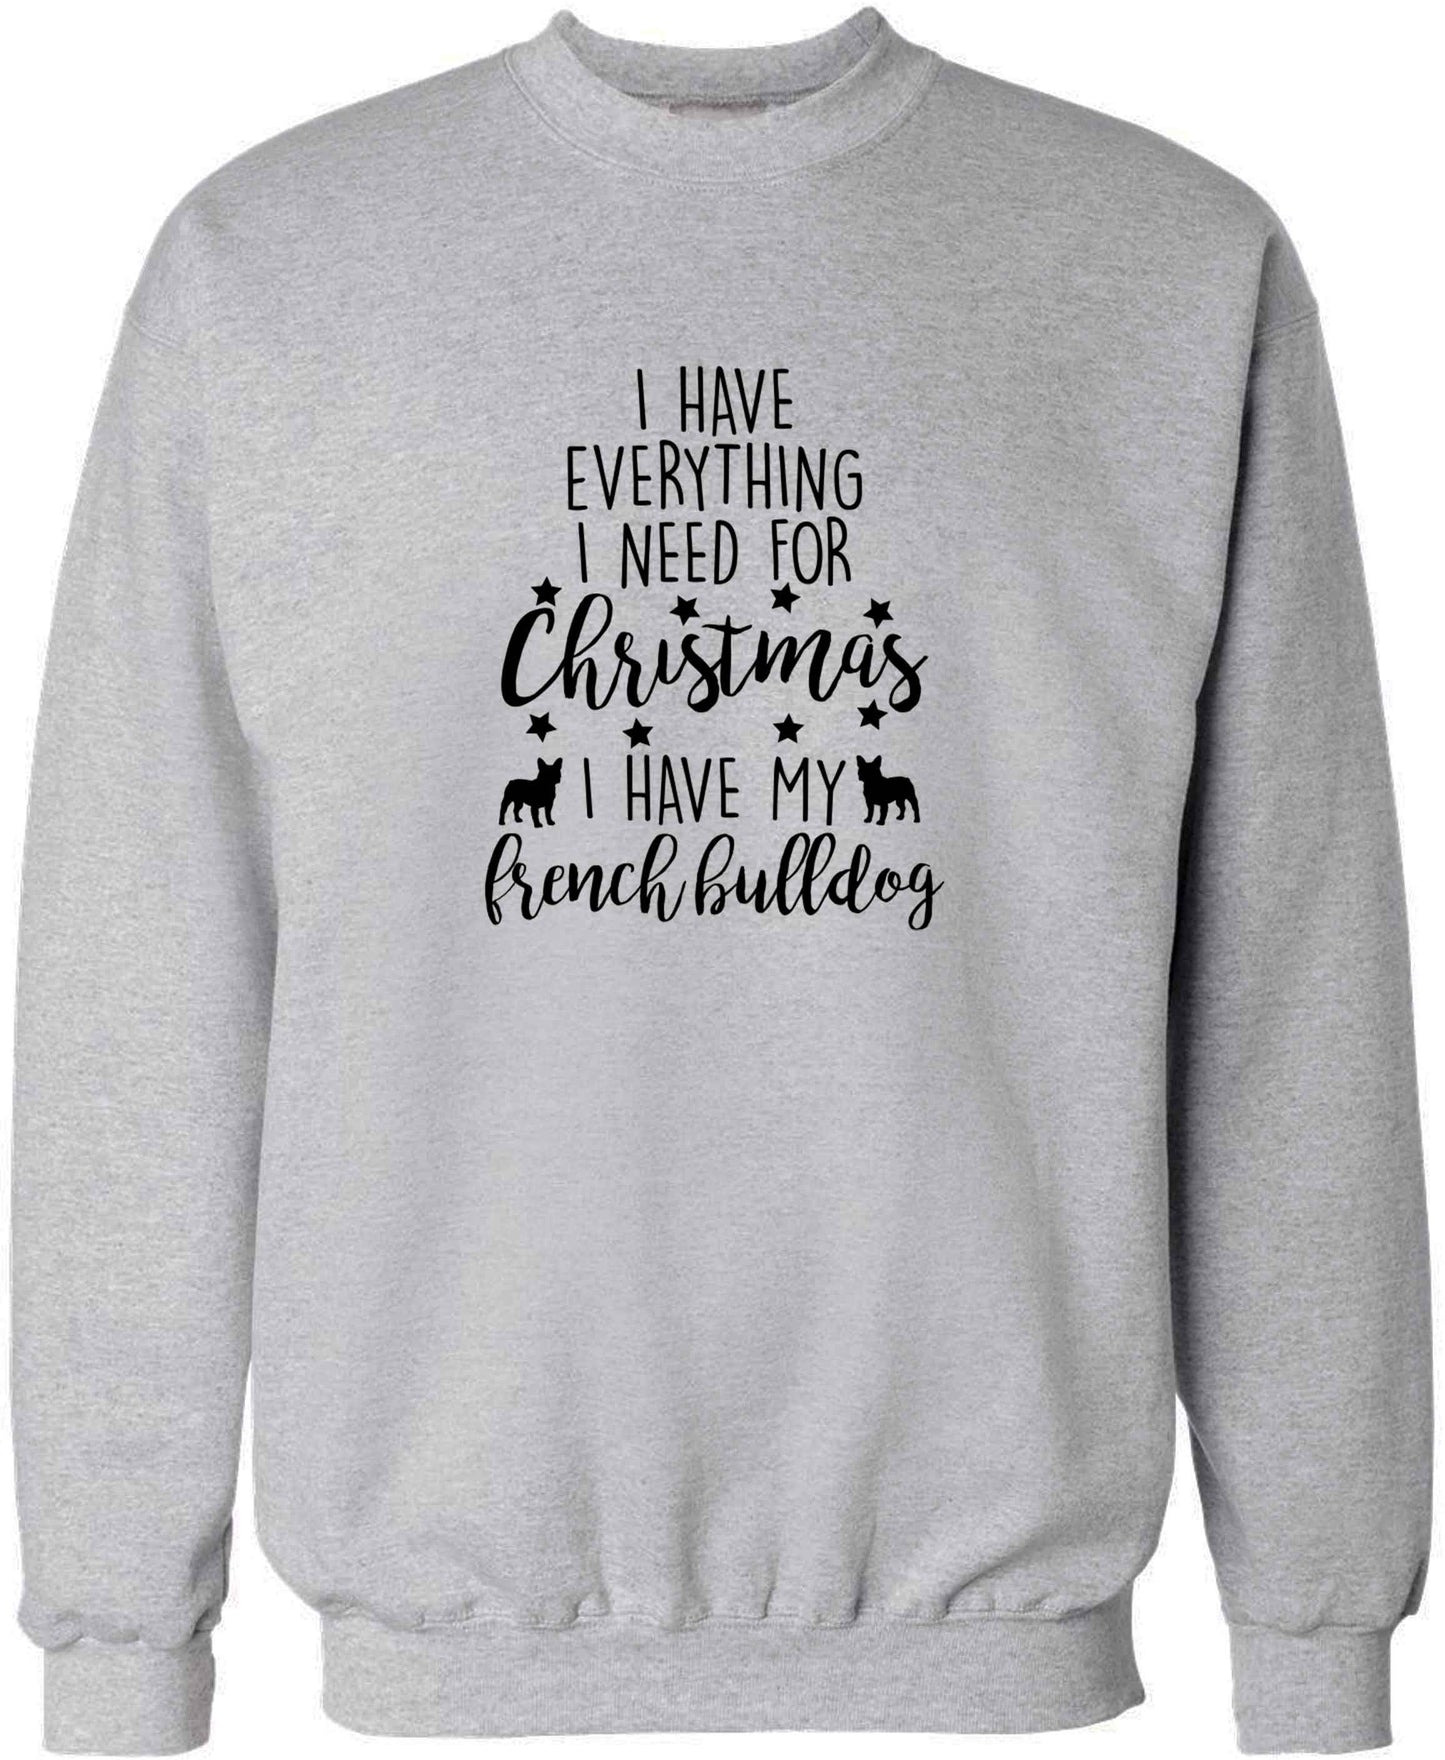 I have everything I need for Christmas I have my french bulldog adult's unisex grey sweater 2XL